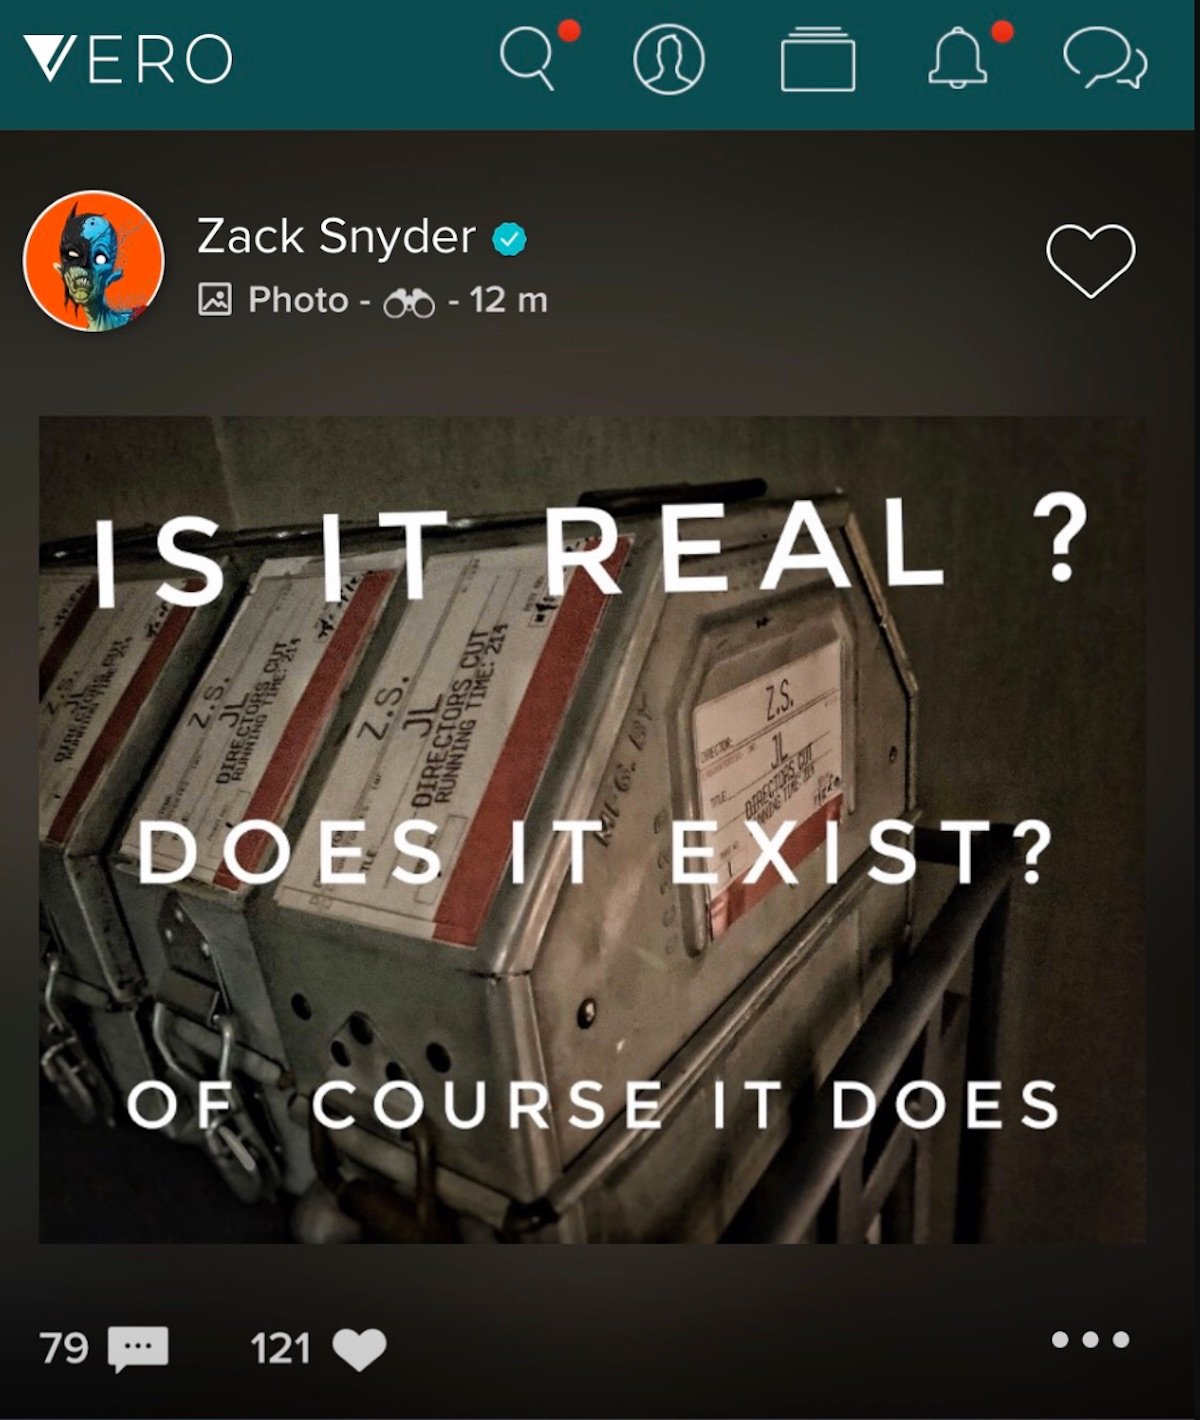 Zack Snyder's vero post